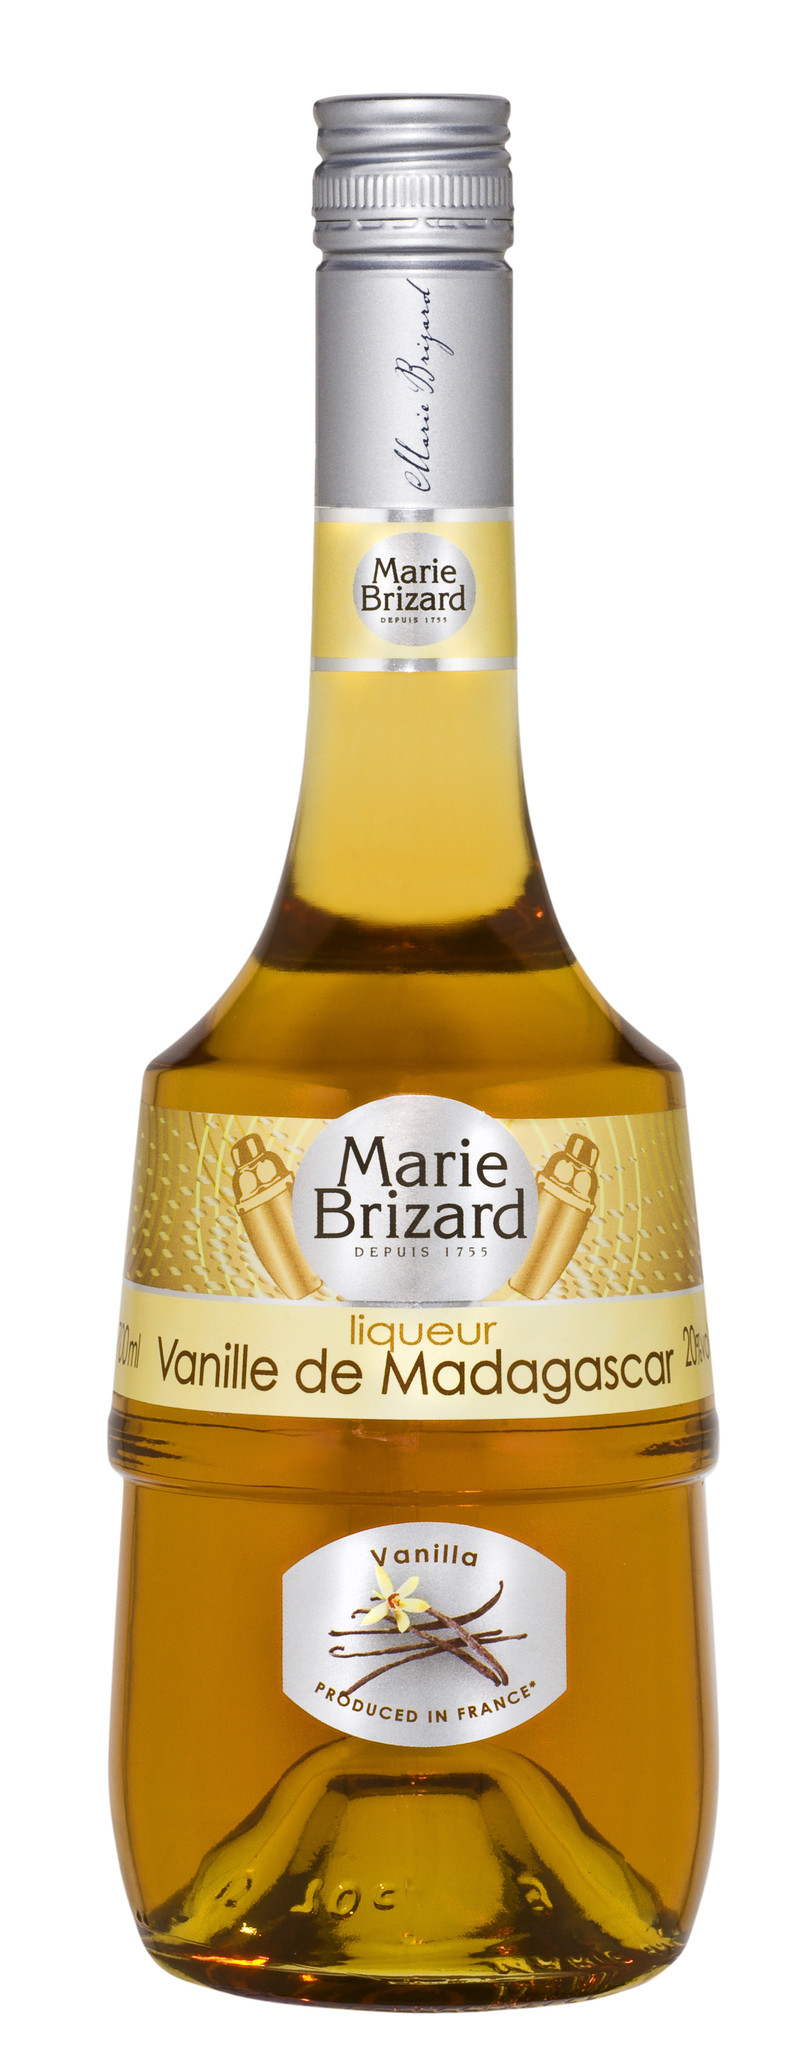 Vanille - Marie Brizard